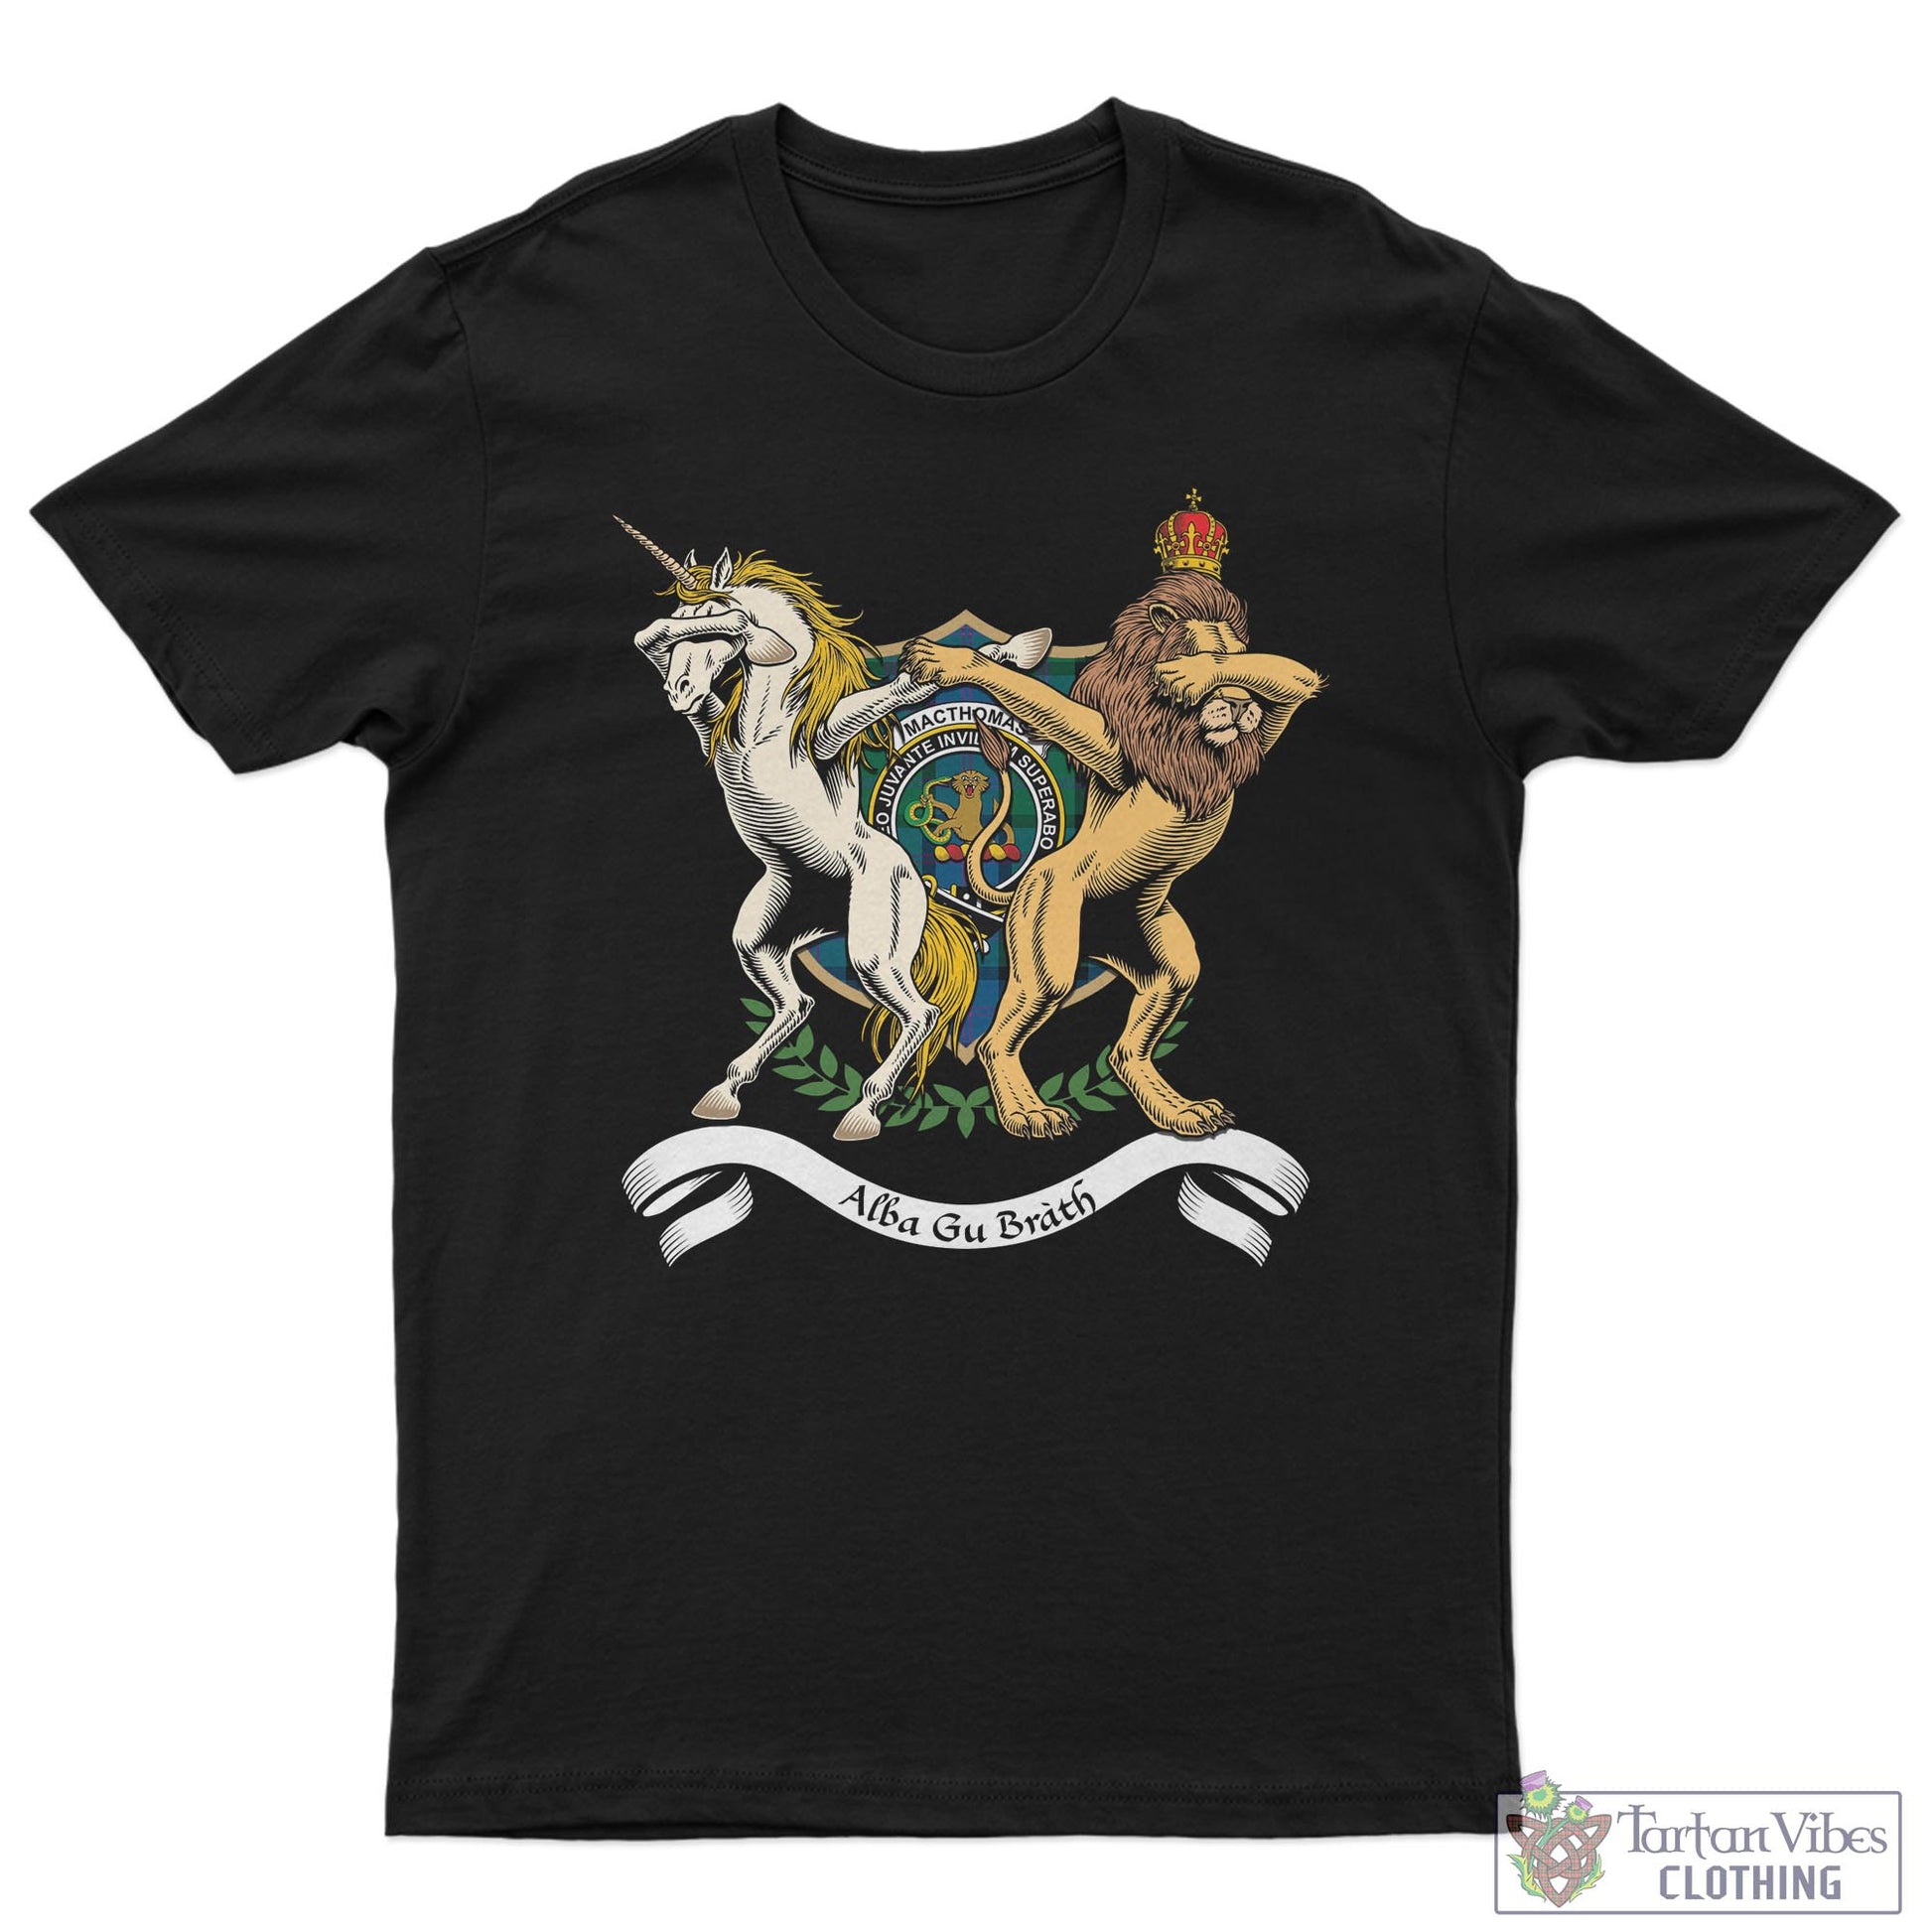 Tartan Vibes Clothing MacThomas Family Crest Cotton Men's T-Shirt with Scotland Royal Coat Of Arm Funny Style